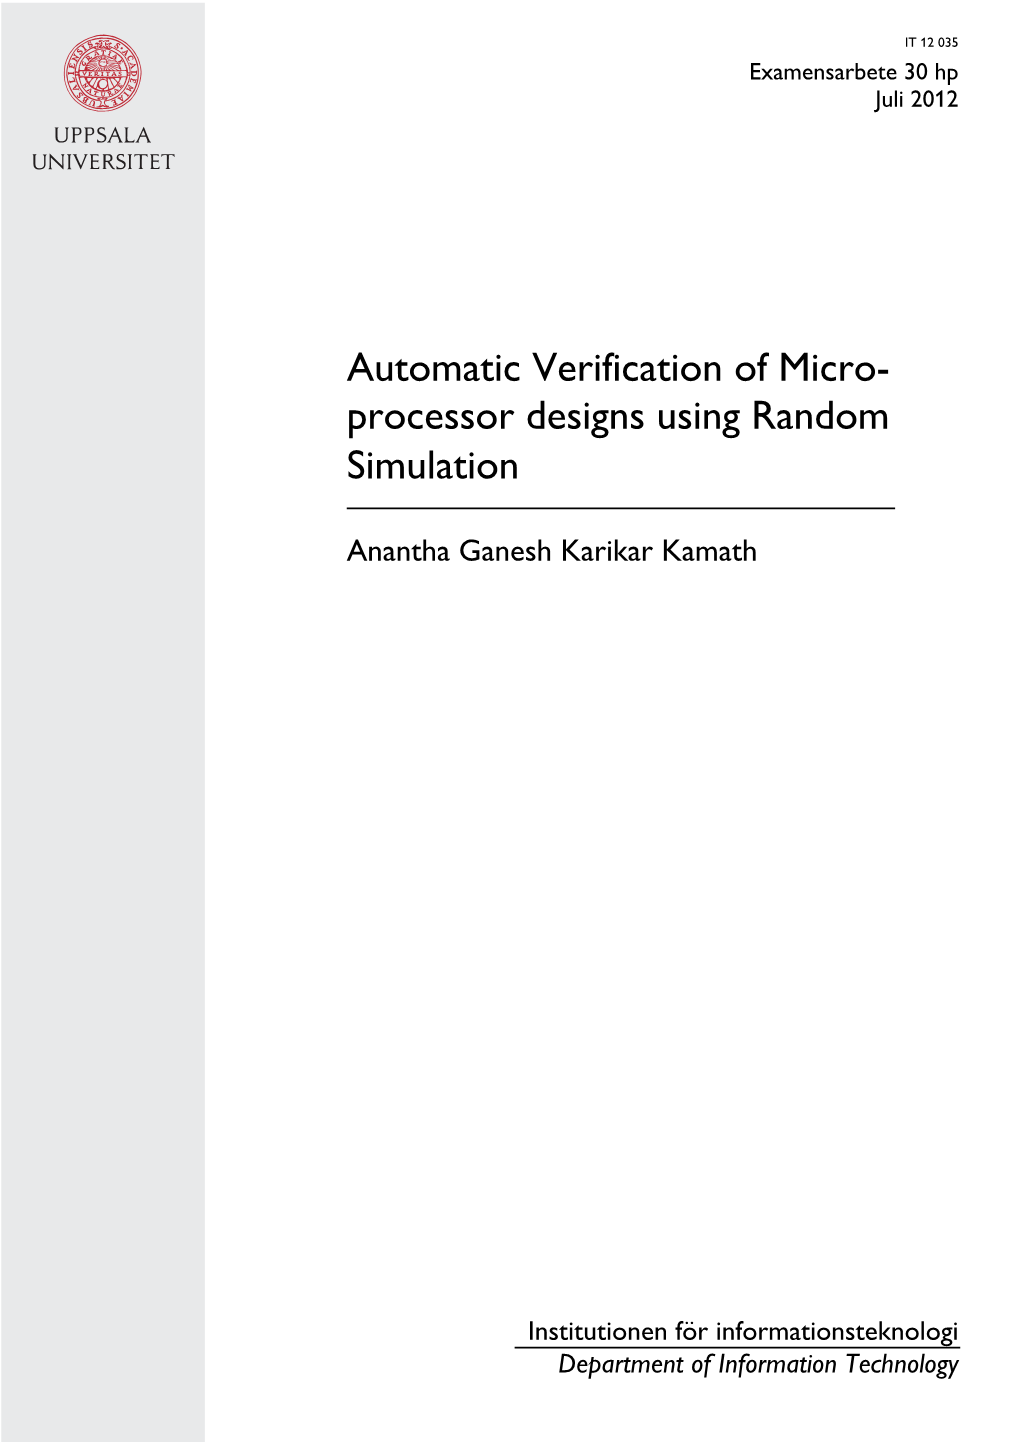 Automatic Verification of Micro- Processor Designs Using Random Simulation